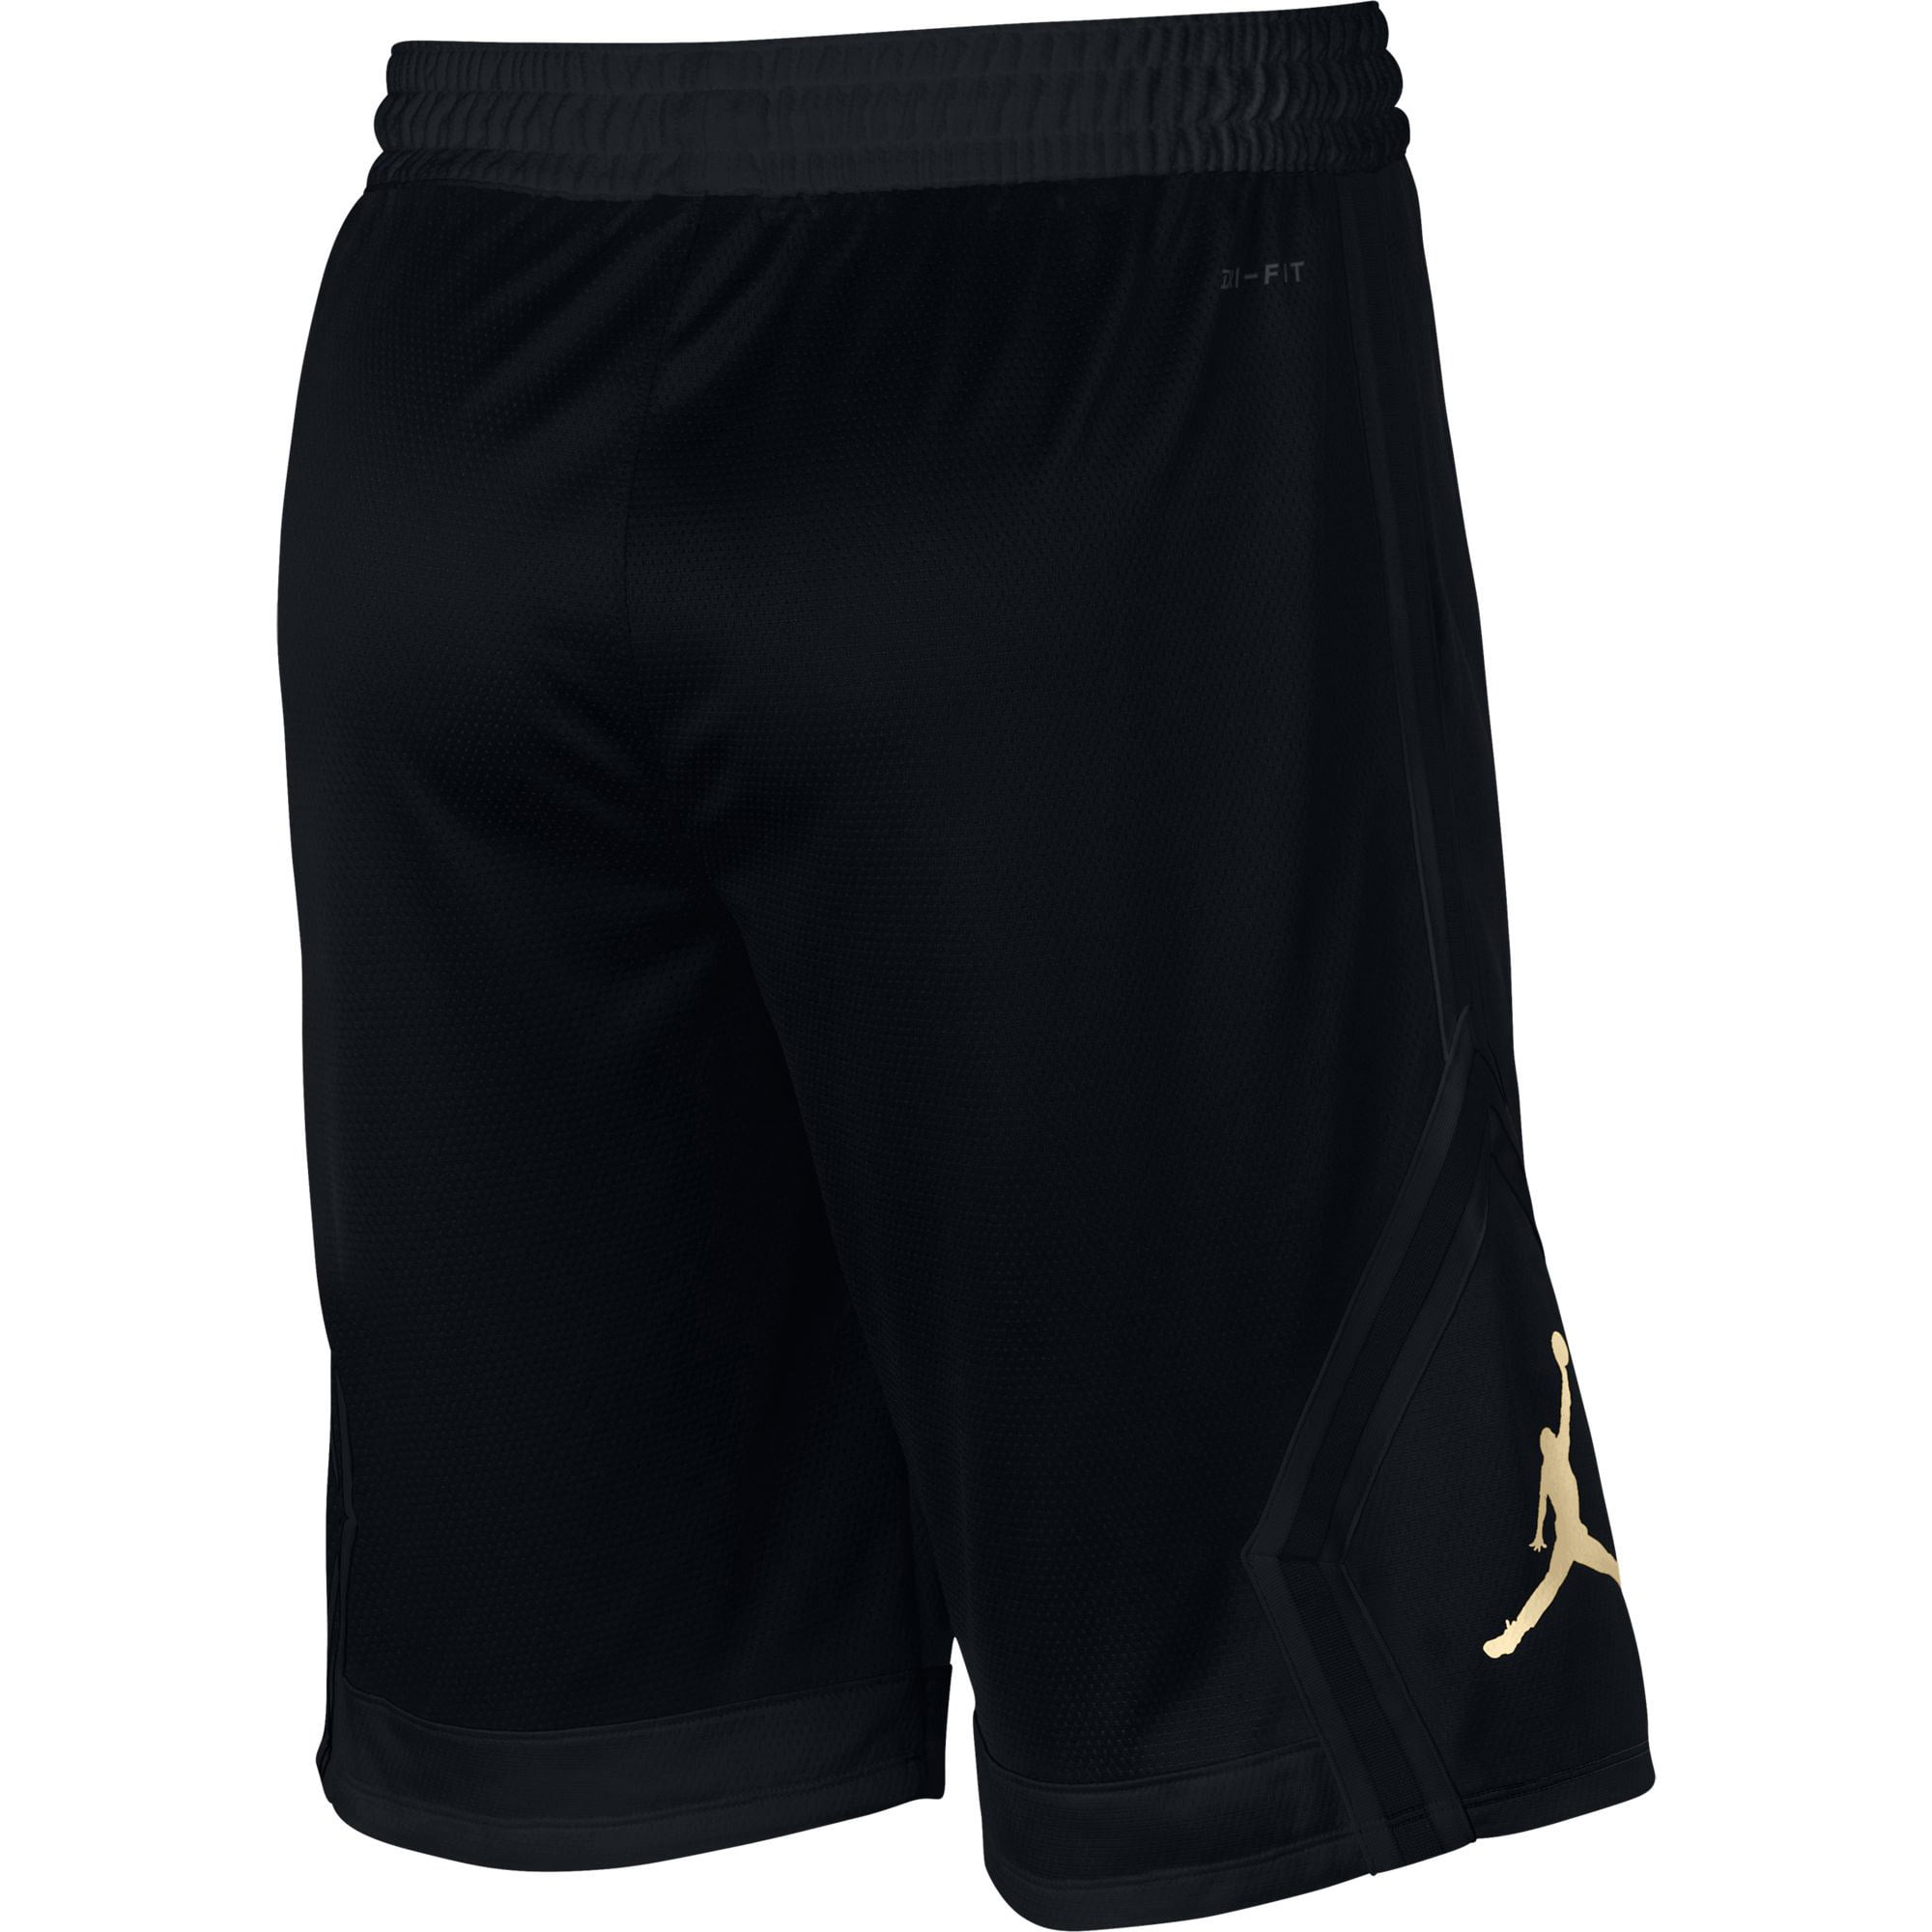 black and gold jordan shorts